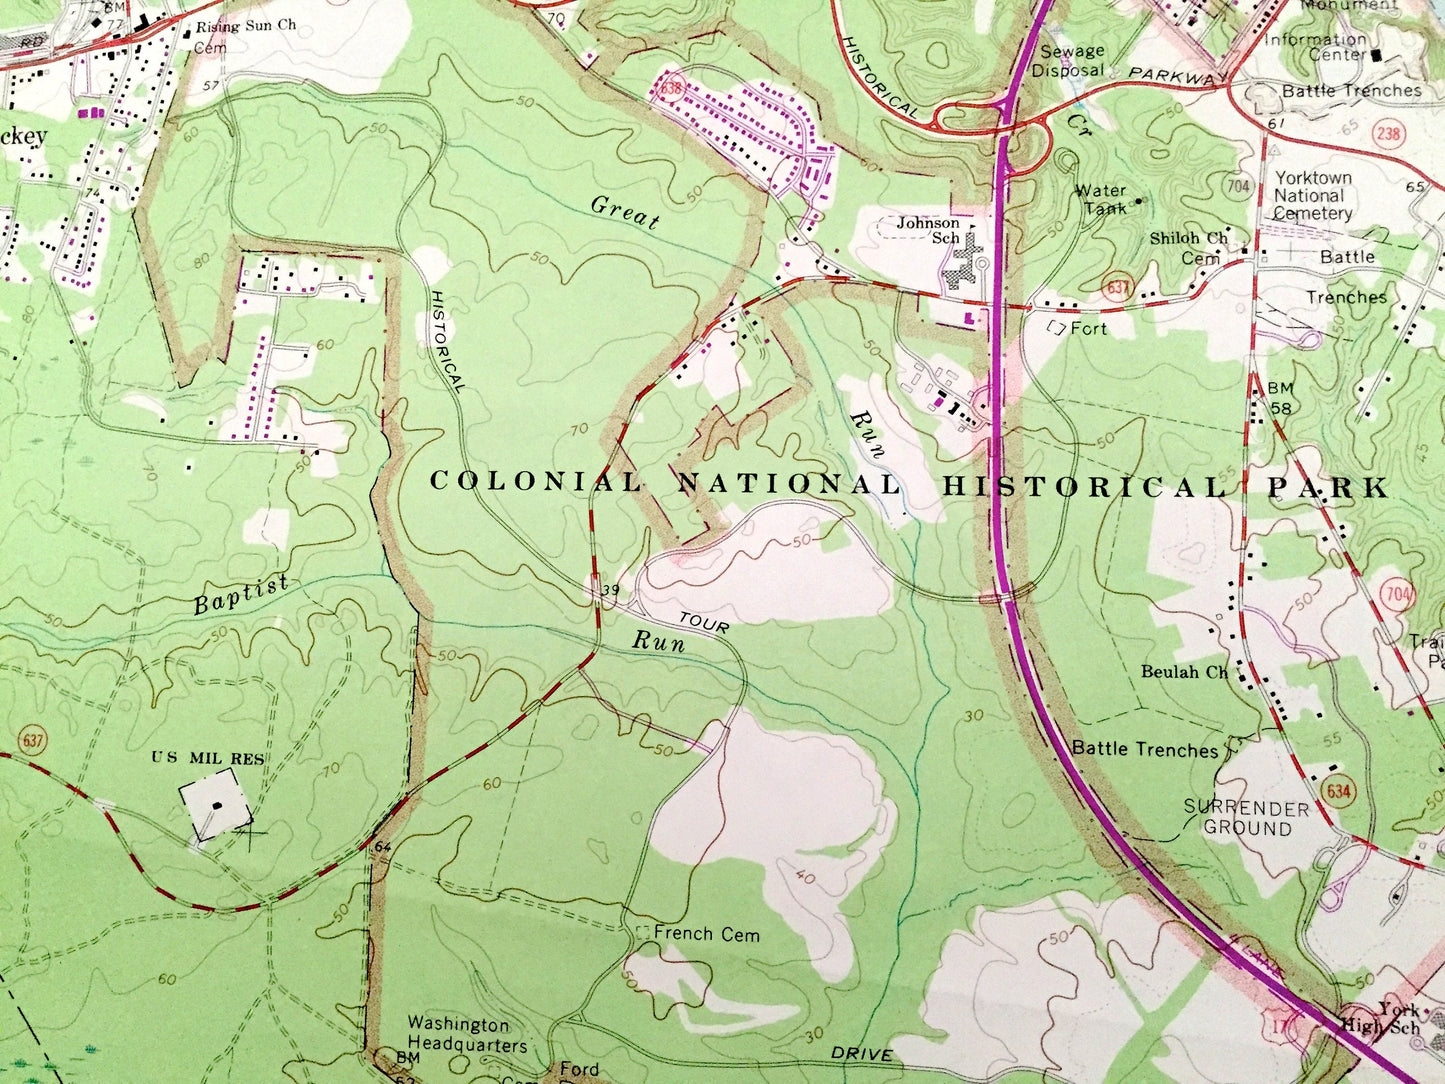 Antique Yorktown, Virginia 1965 US Geological Survey Topographic Map – York, James City County, Revolutionary War Battle National Park, VA